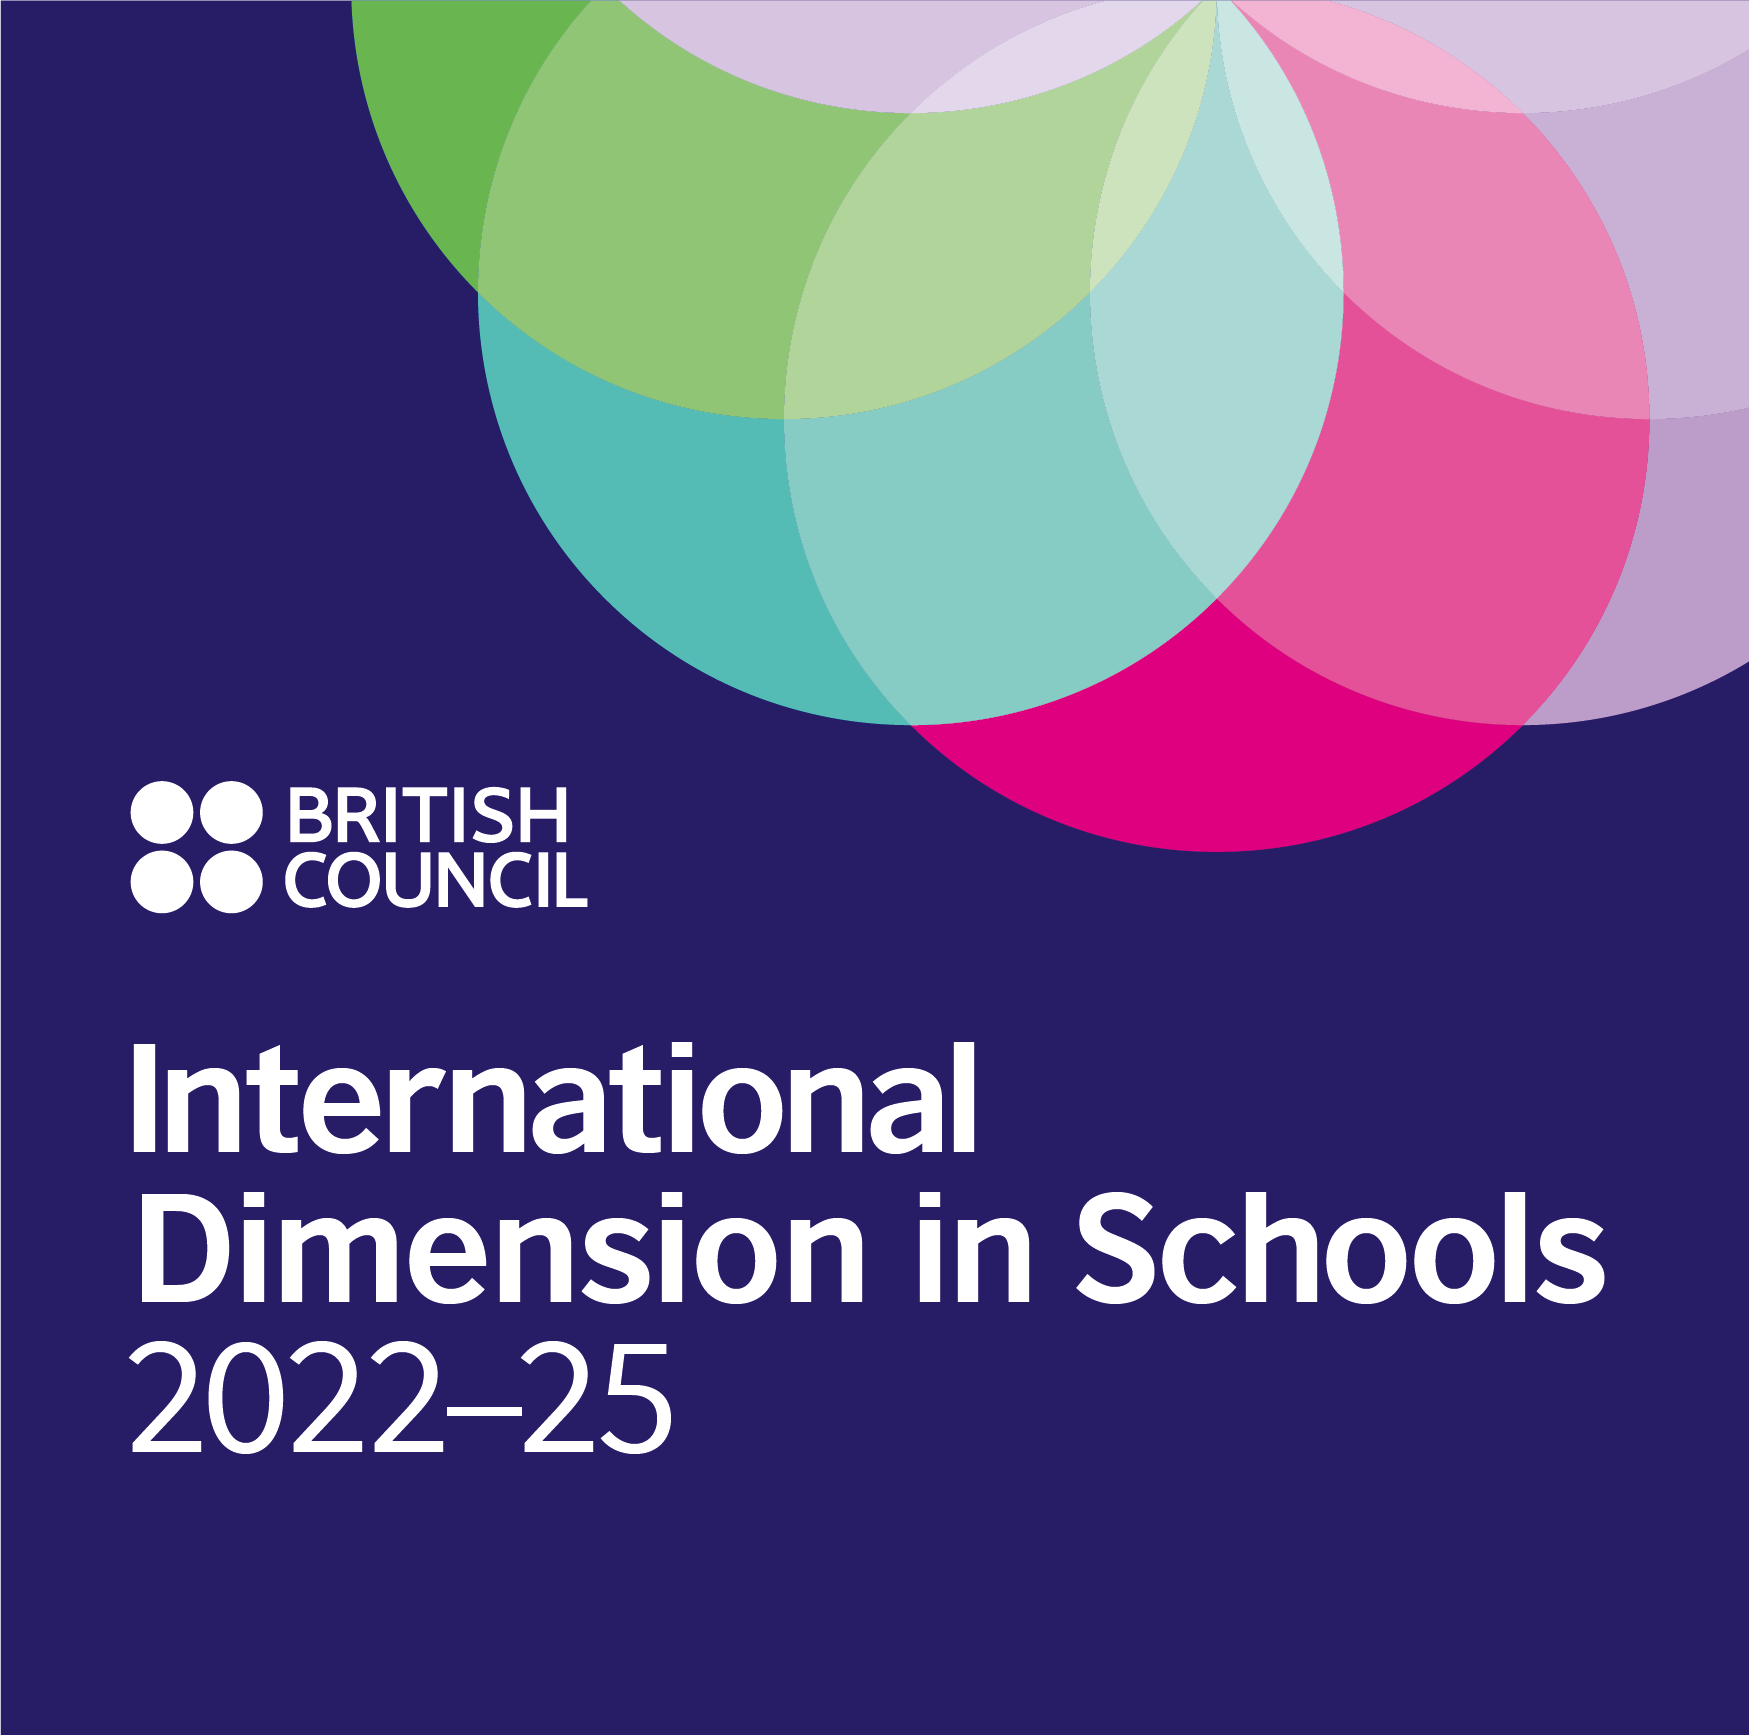 The International School Award by British Council